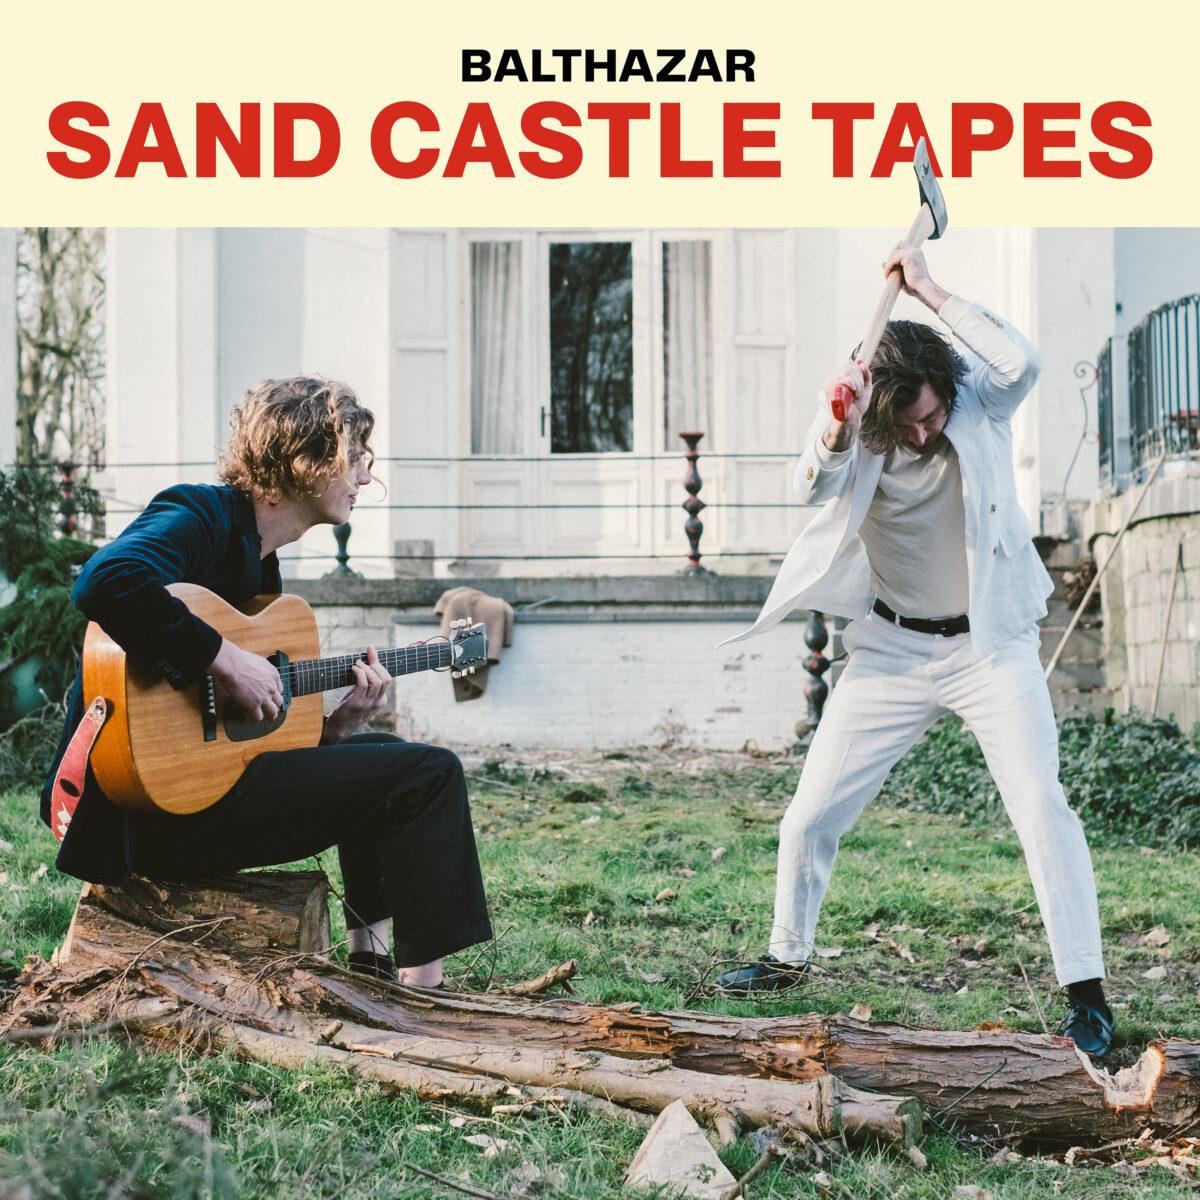 BALTHAZAR ogłasza premierę "Sand Castle Tapes"!